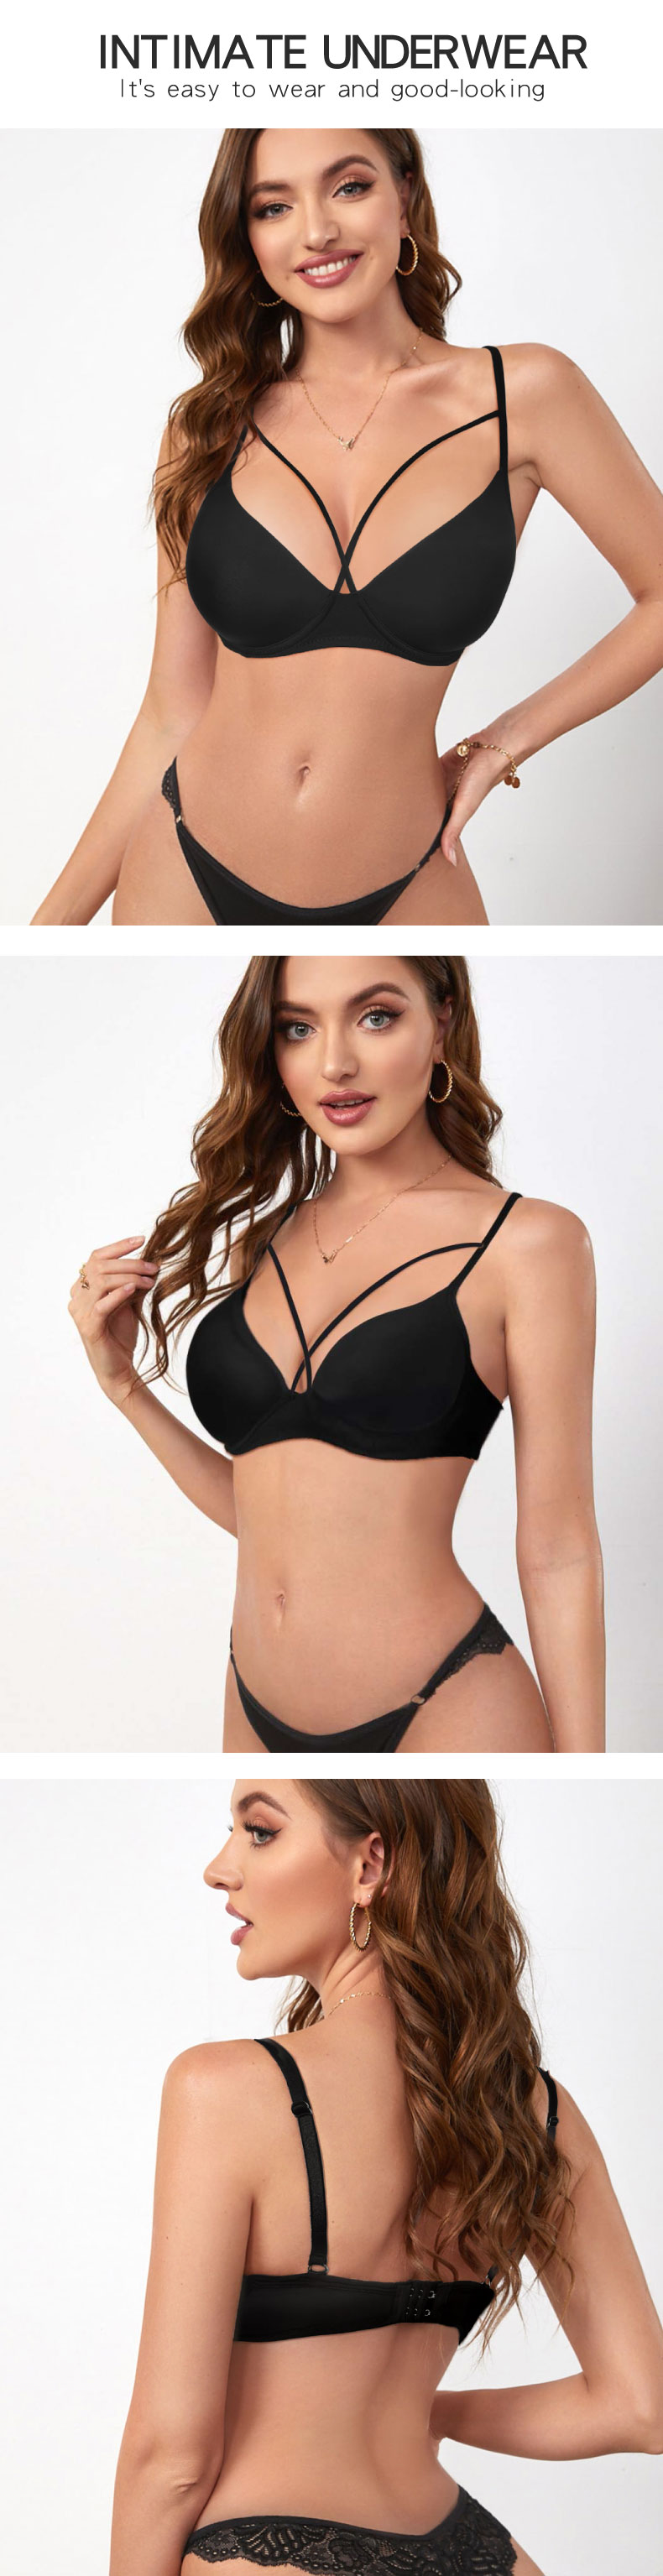 sexy bra and panty sets